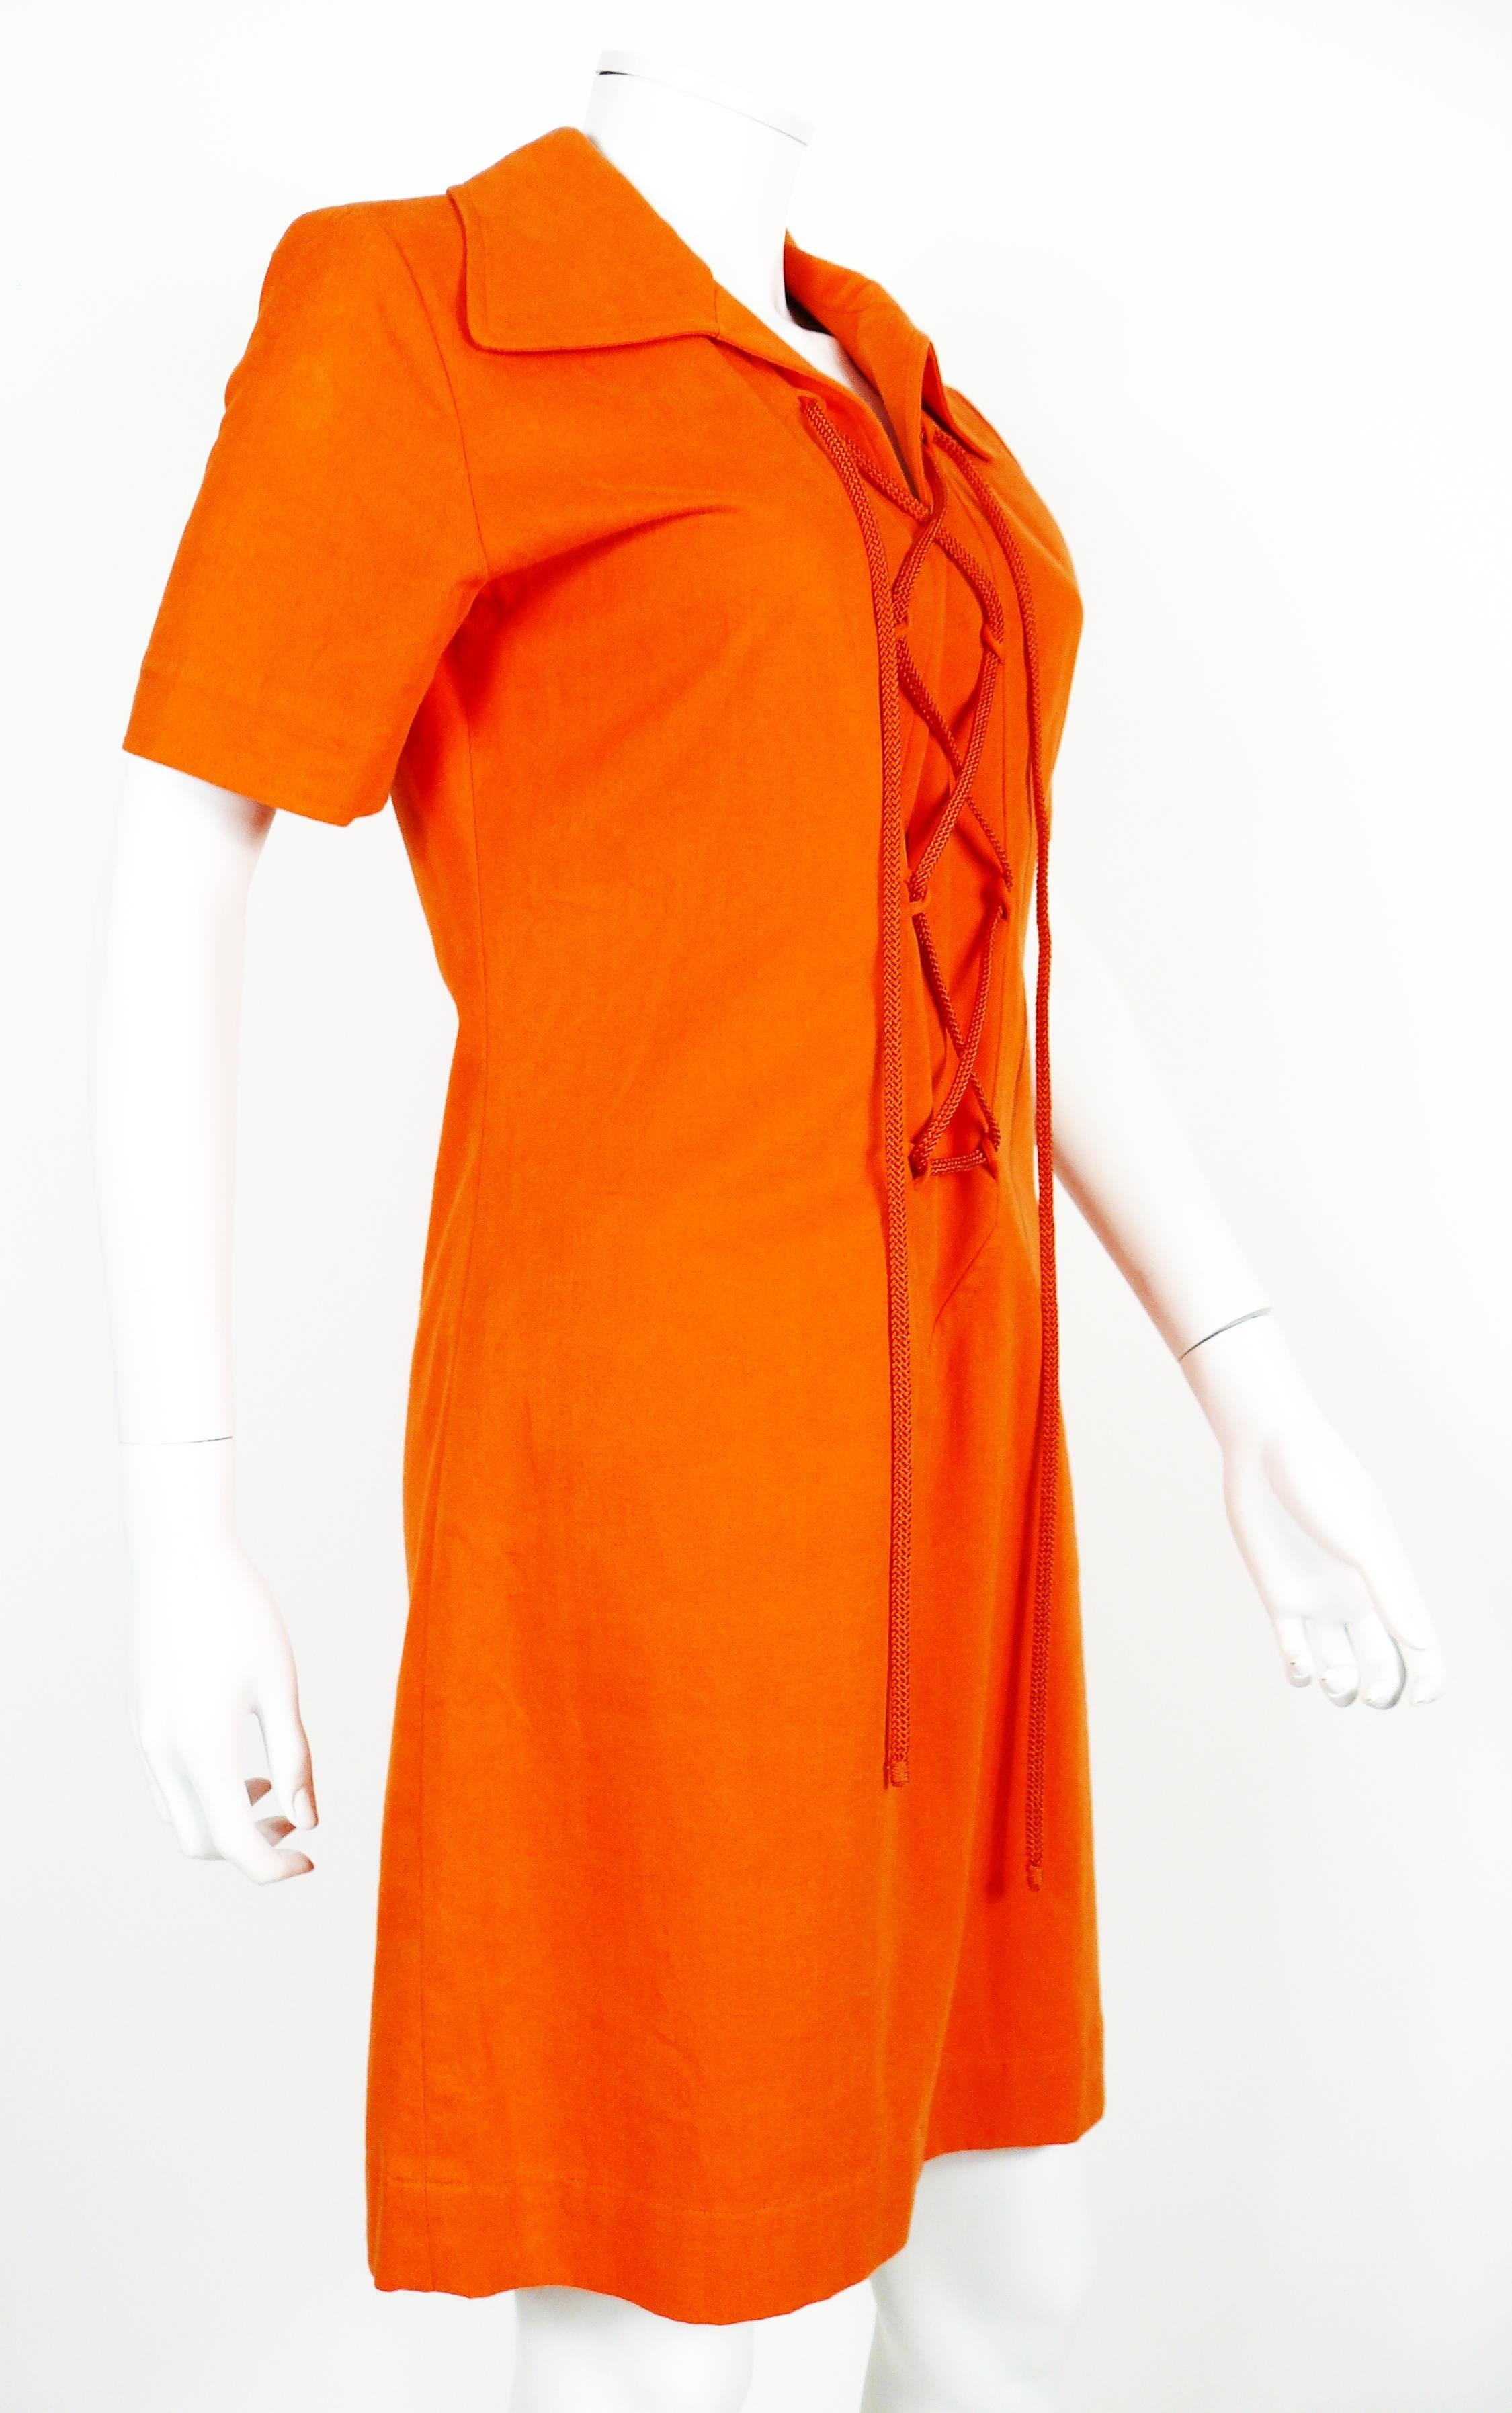 ysl orange dress